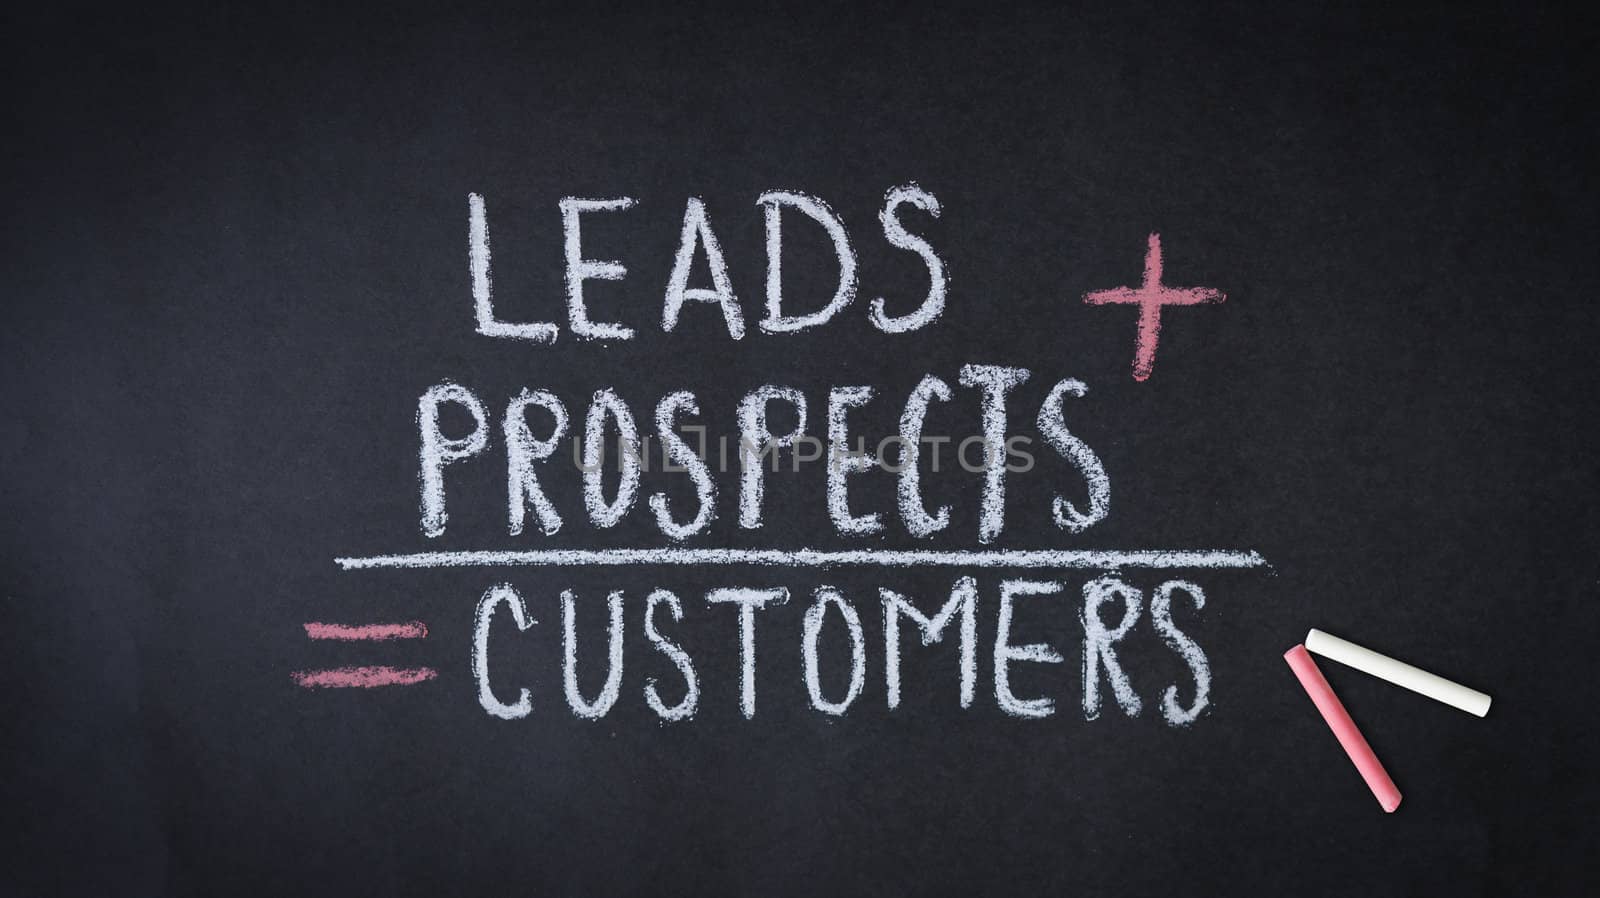 Leads, prospects, customers formula by kbuntu